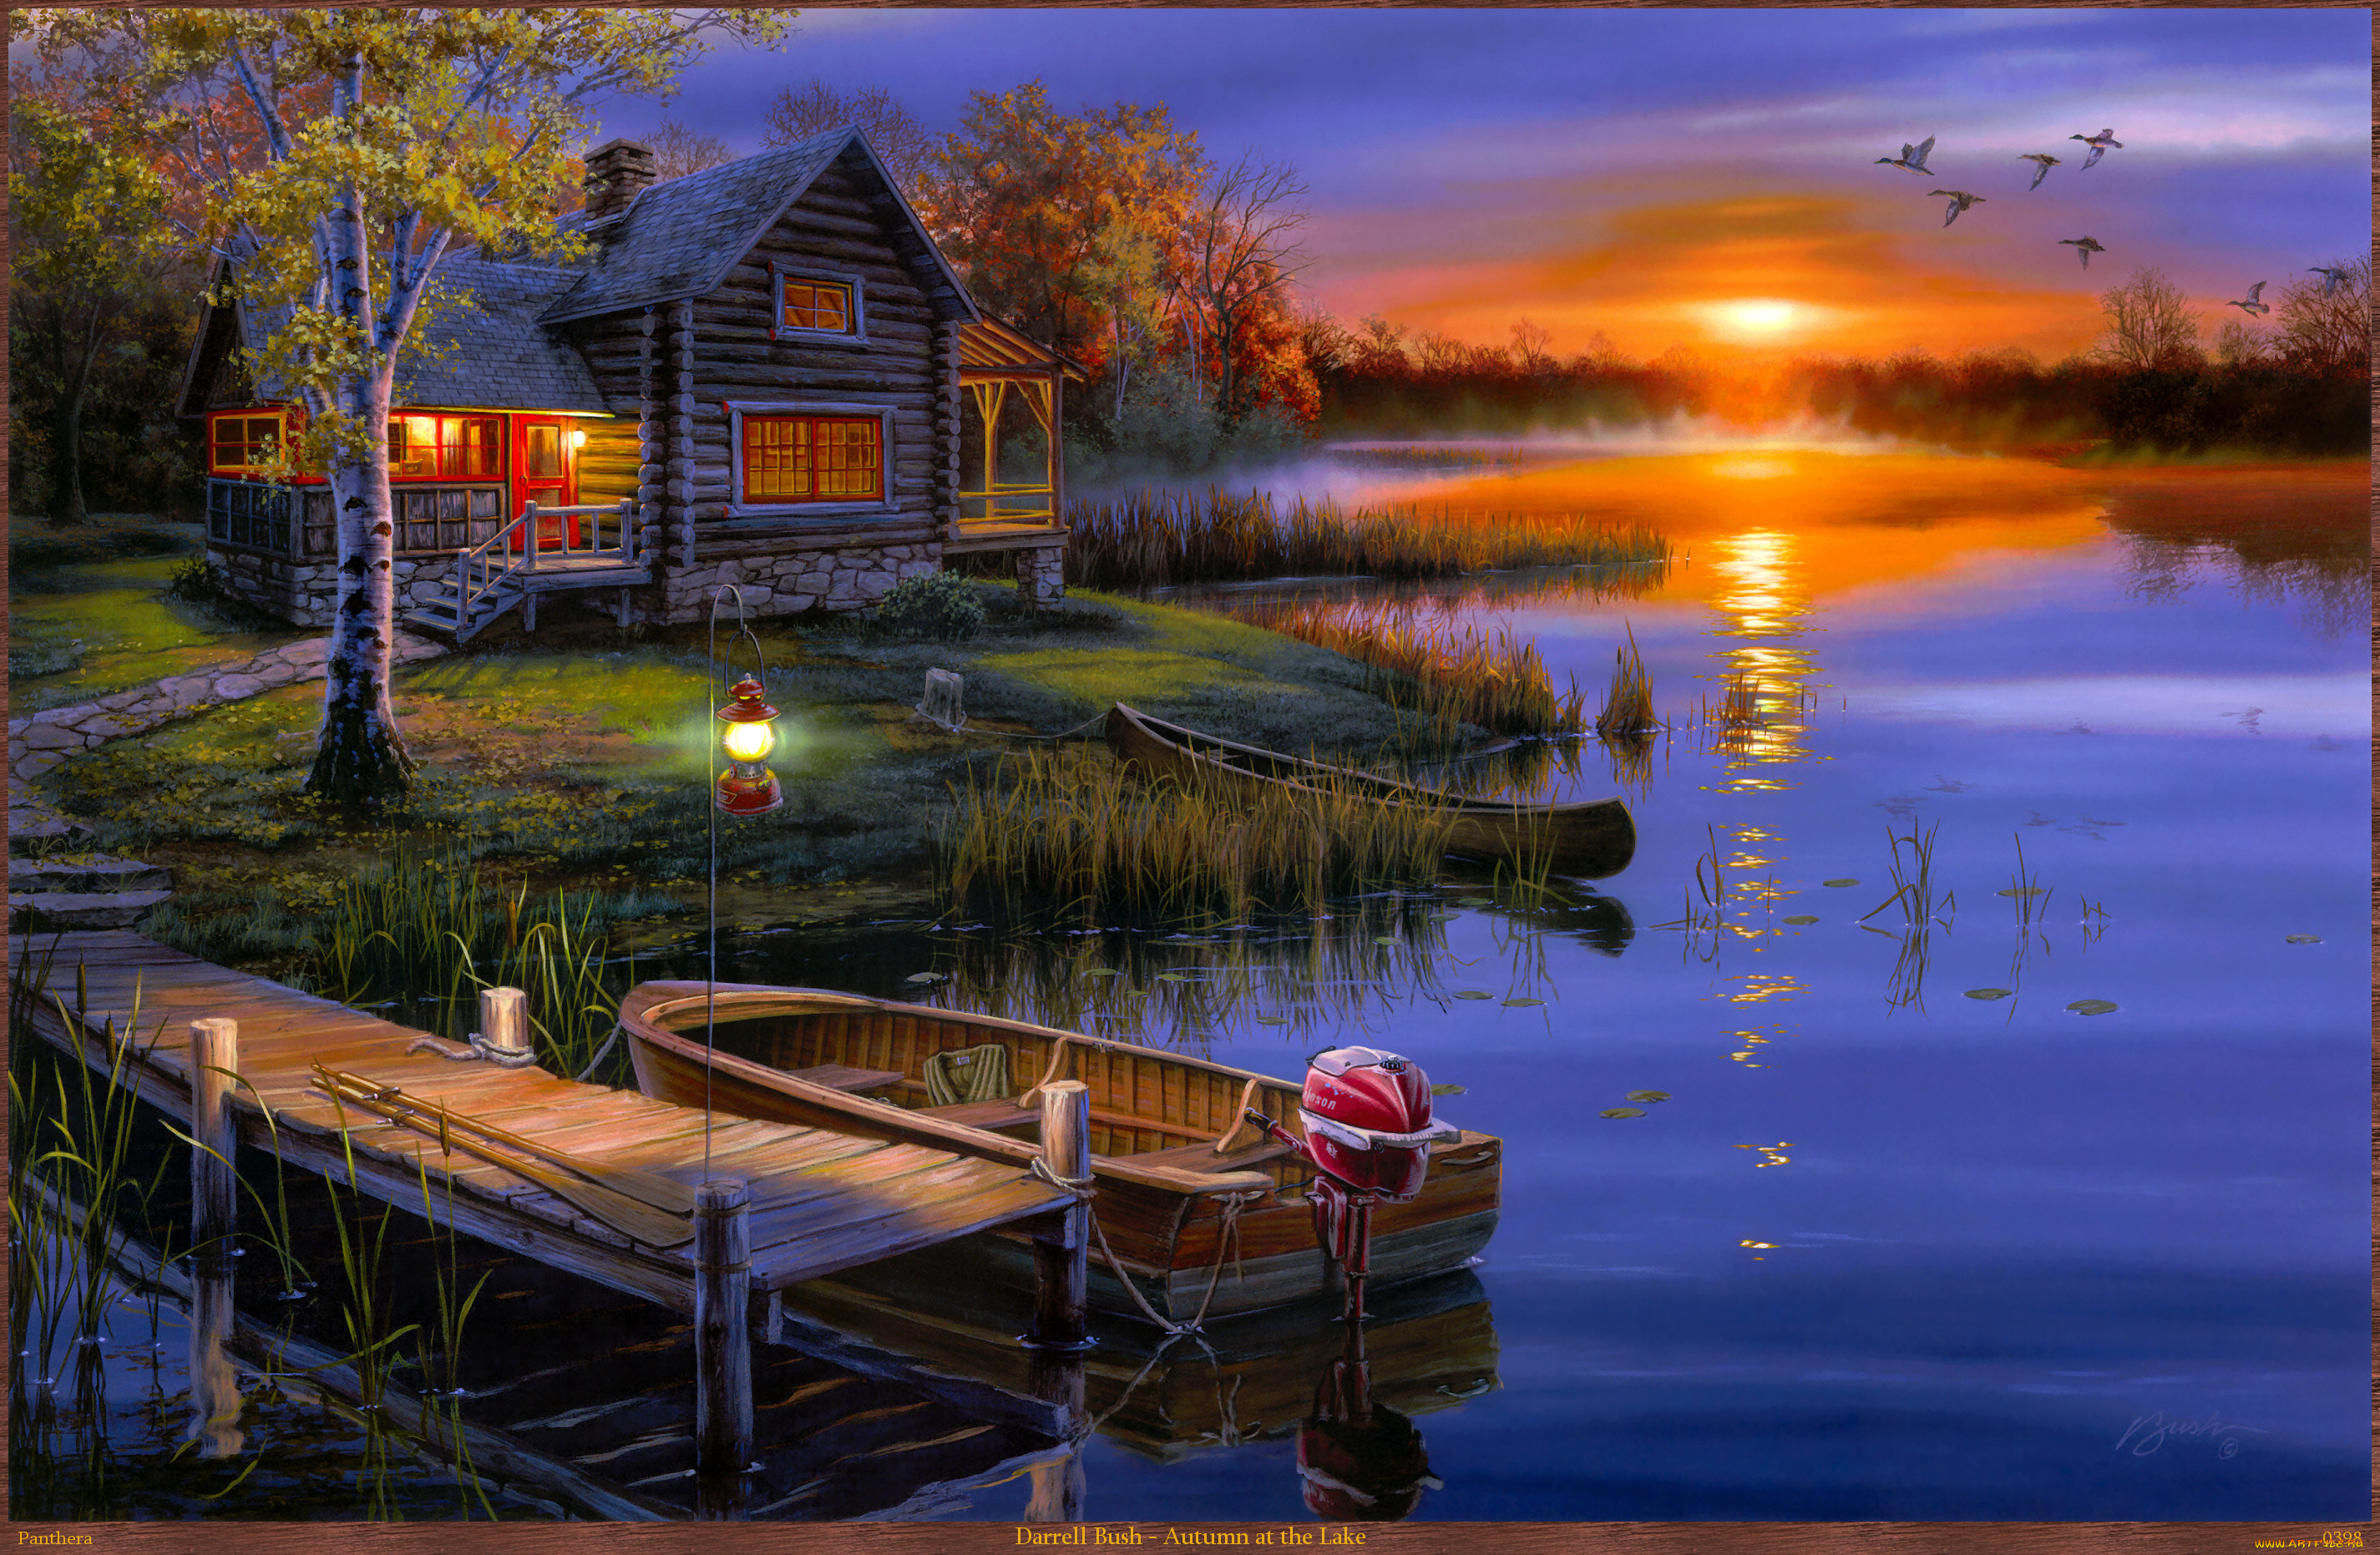 darrell, bush, autumn, at, the, lake, рисованные, арт, домик, фонарь, утки, лодка, пейзаж, озеро, осень, закат